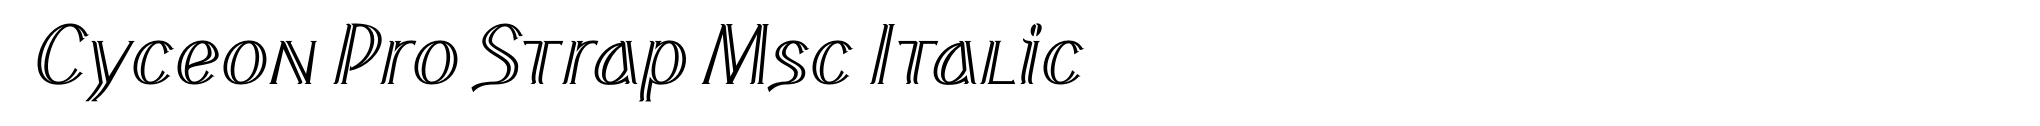 Cyceon Pro Strap Msc Italic image